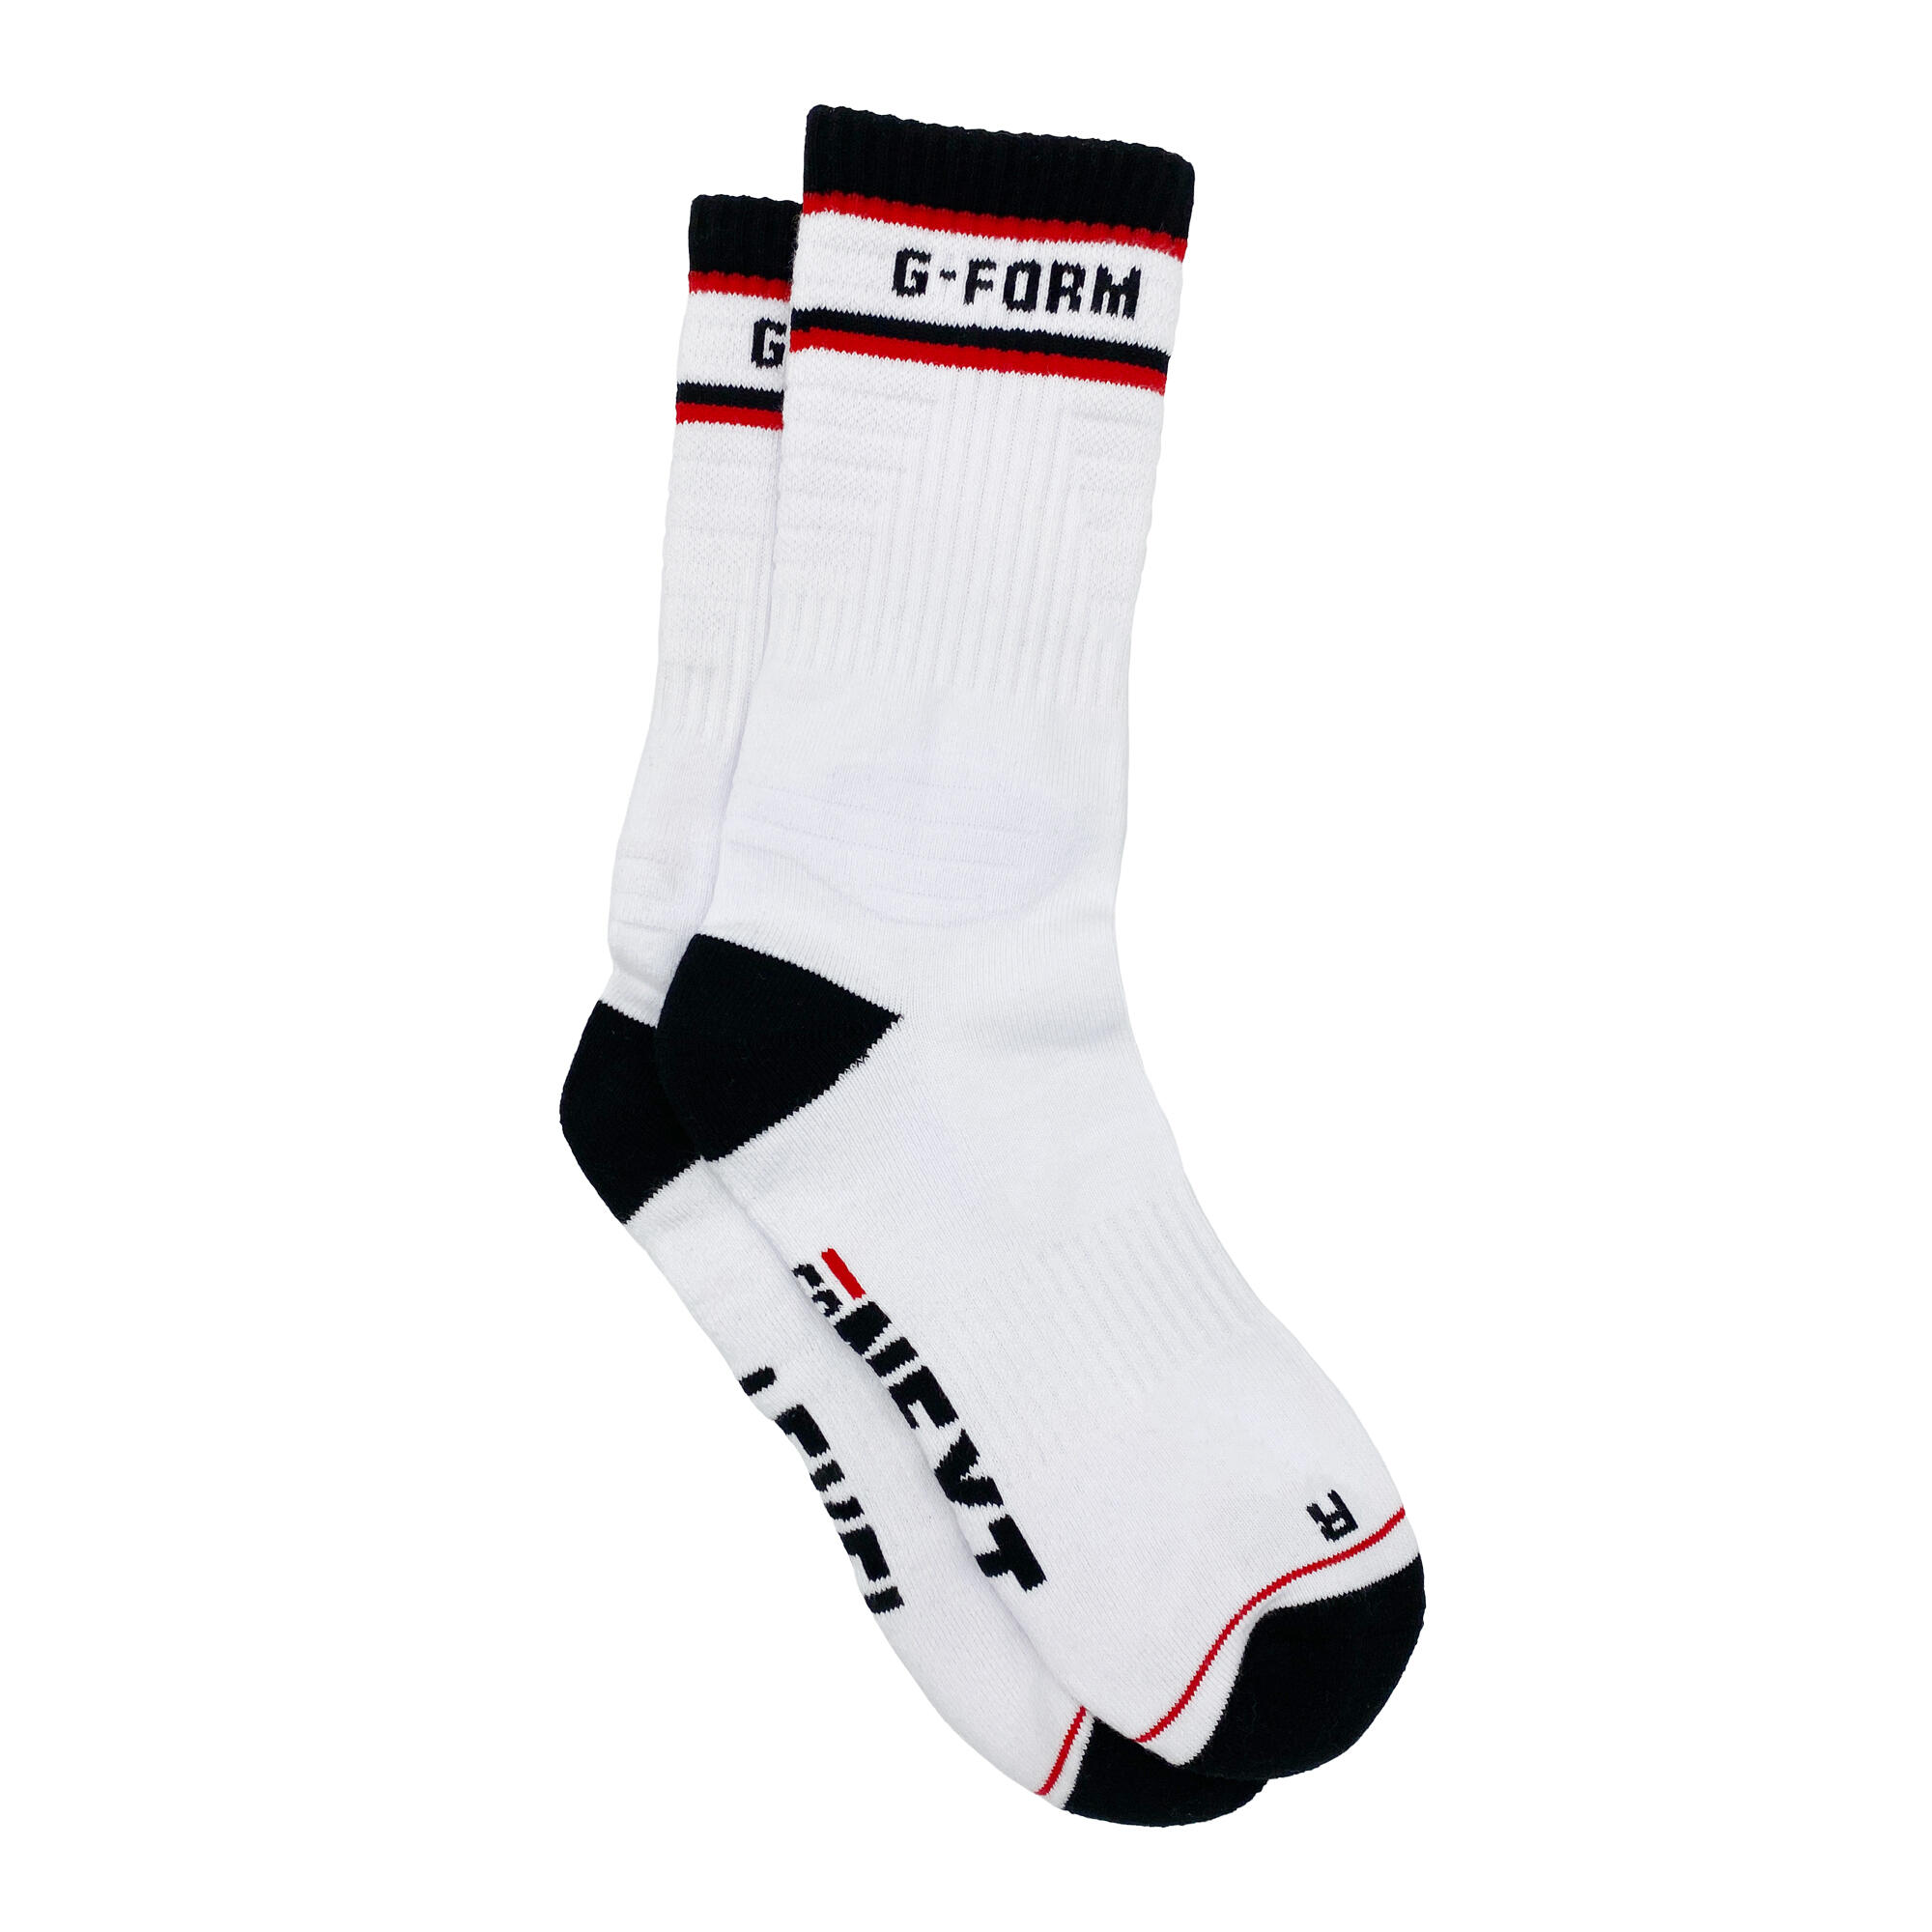 G-FORM G-Form Mid-Calf Sock White Black Red L/XL